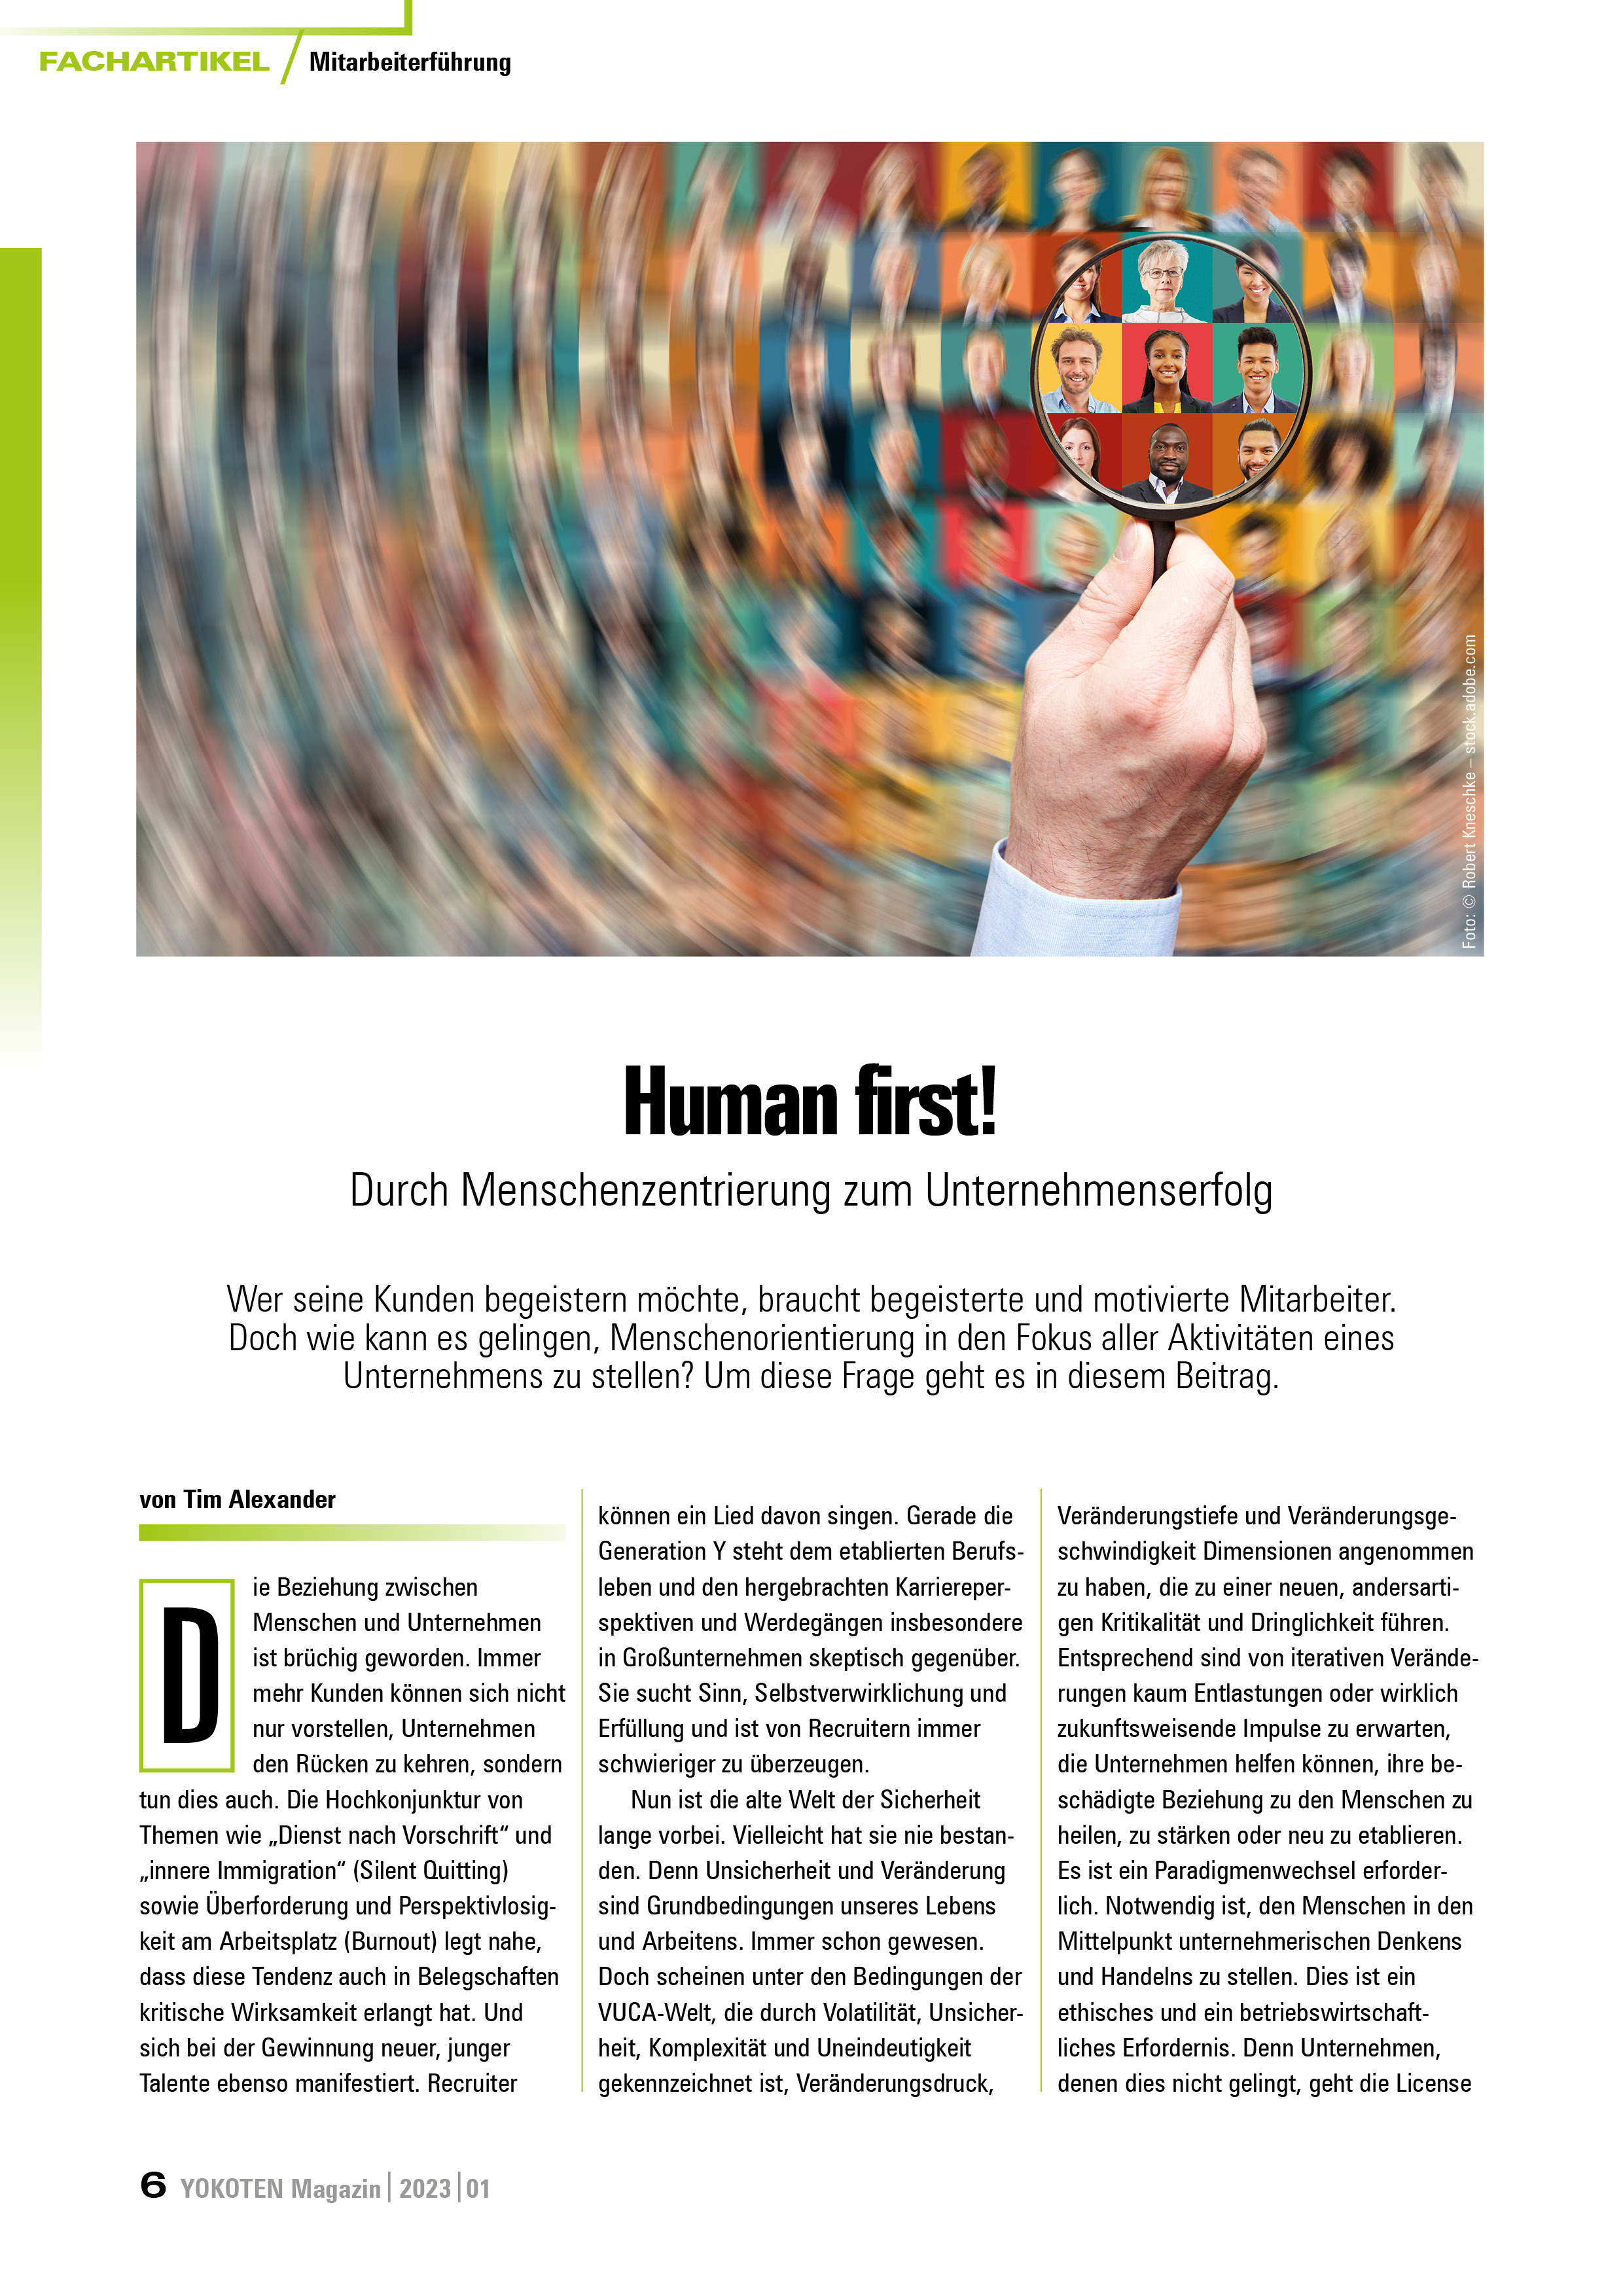 Human first! - Artikel aus Fachmagazin YOKOTEN 2023-01